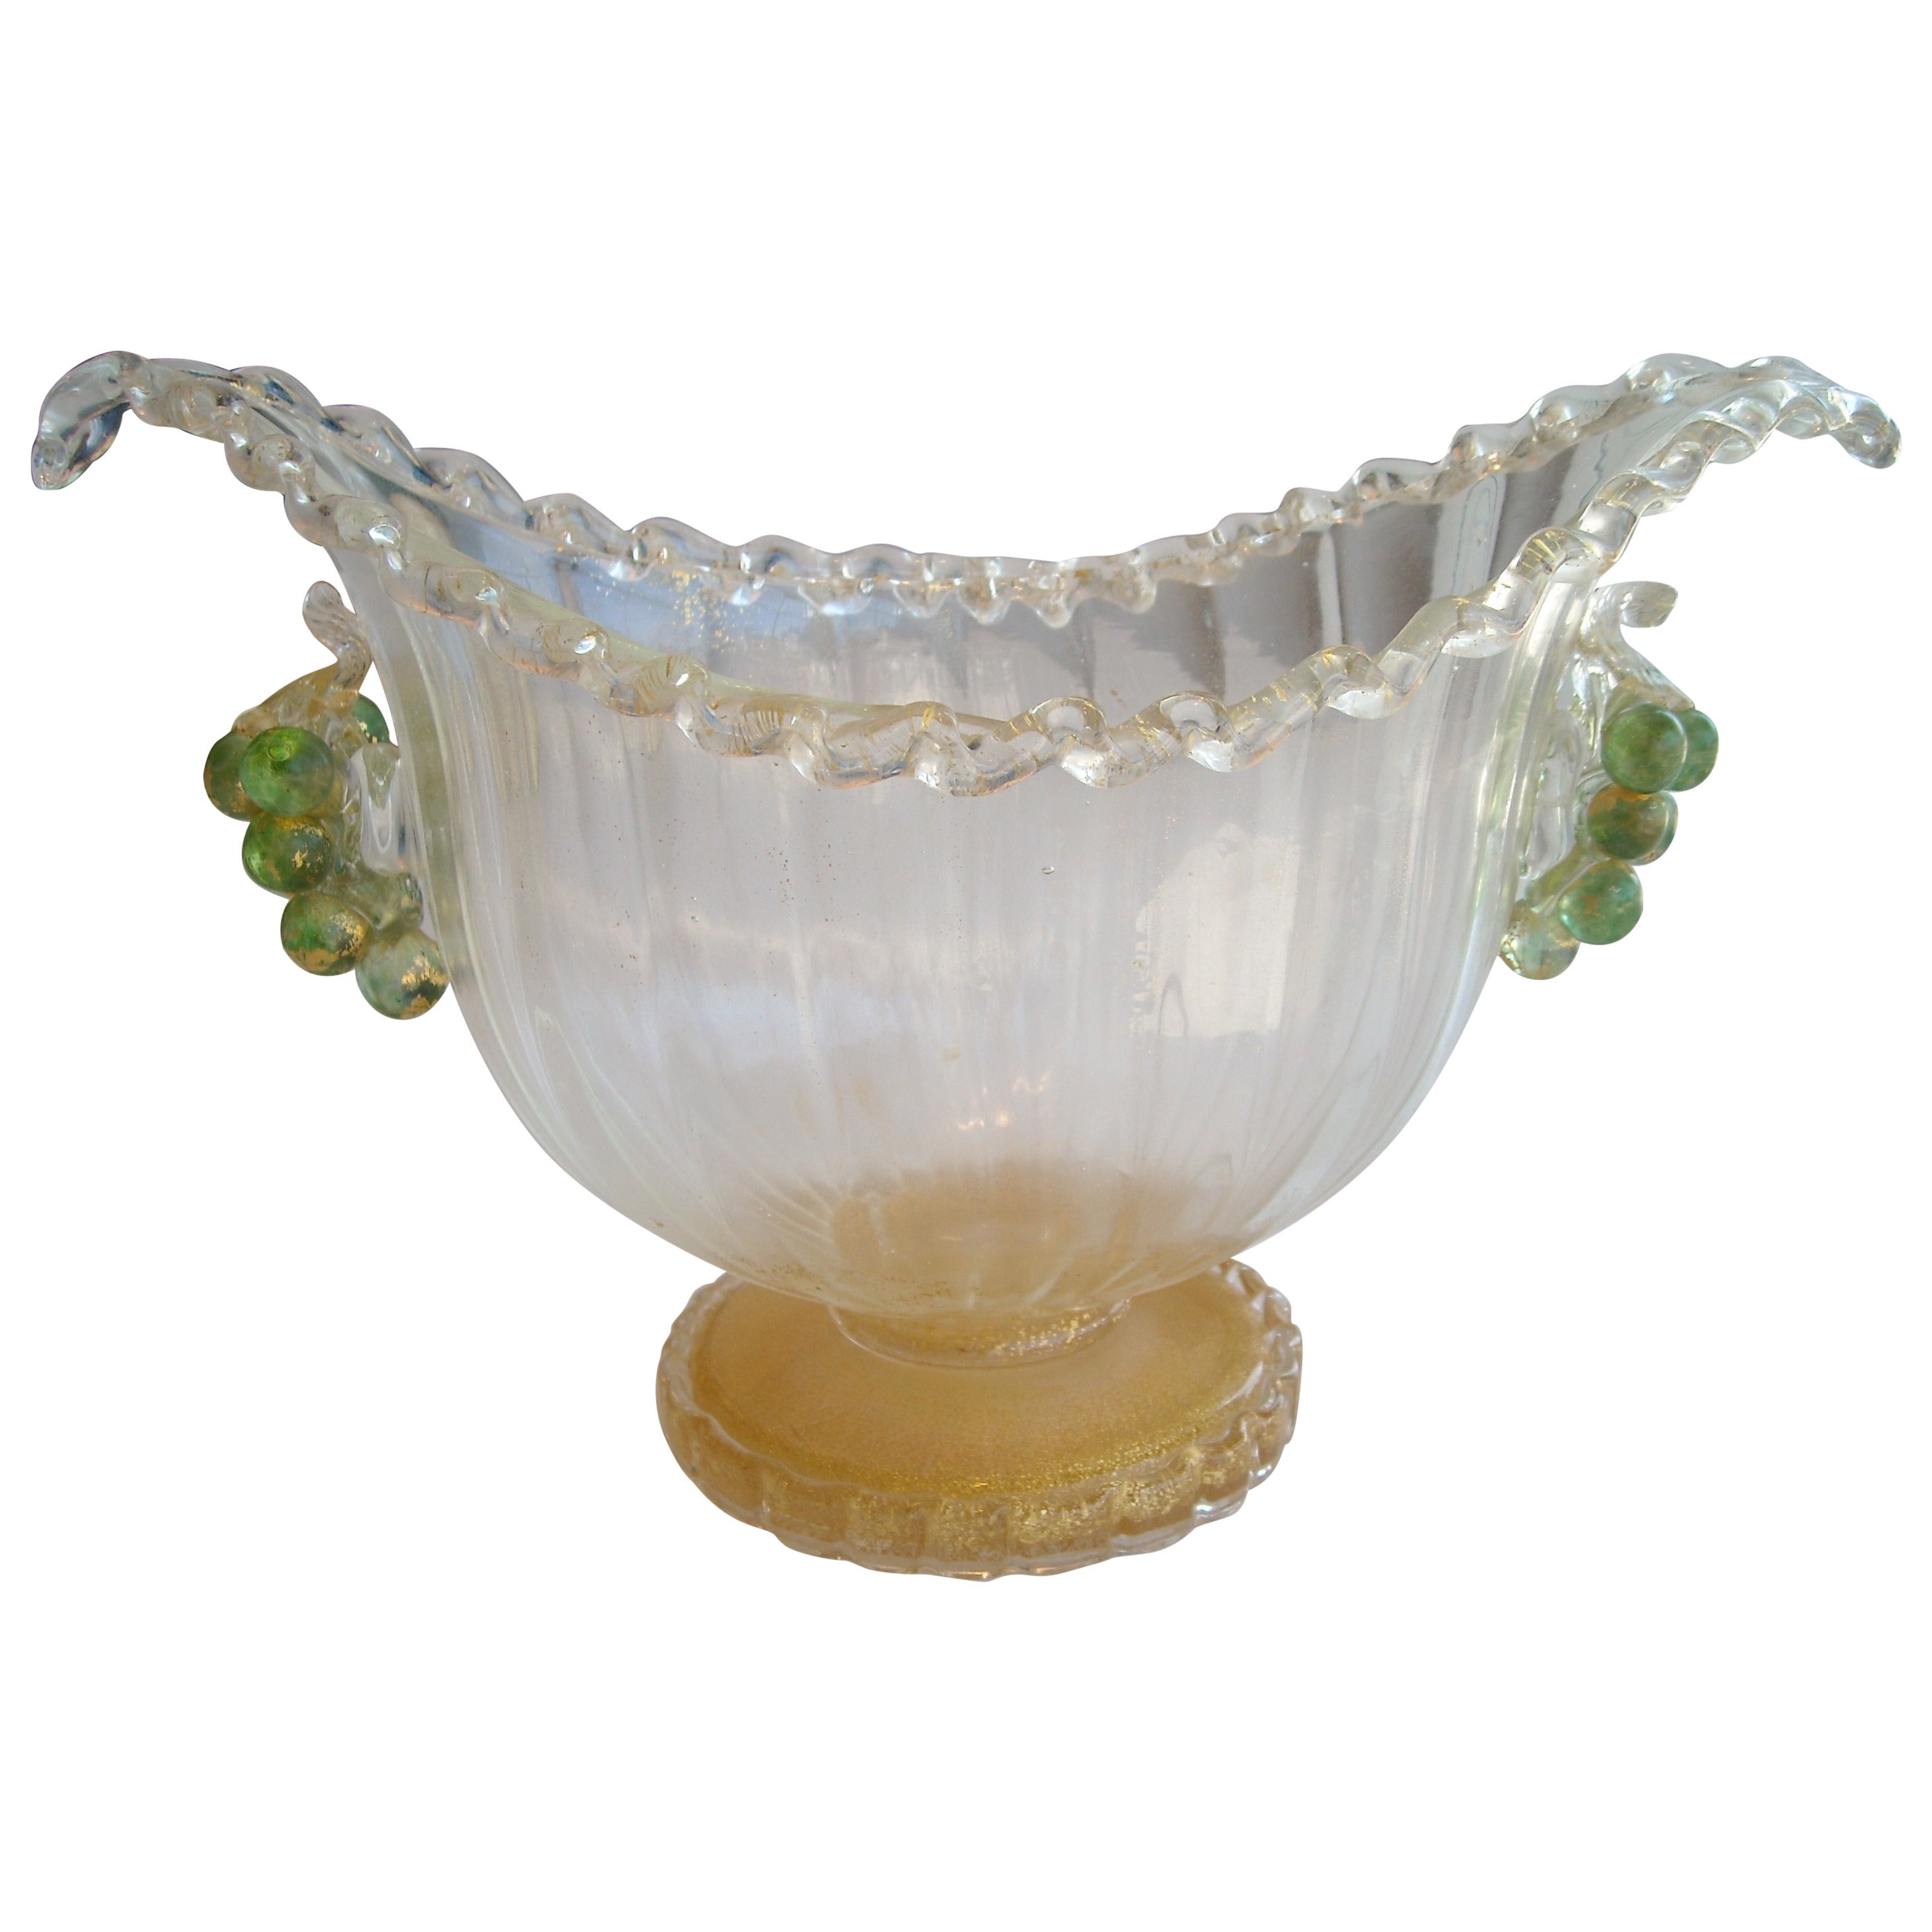 Ercole Barovier Murano Glass and Gold Centerpiece or Vase for Artistica Barovier